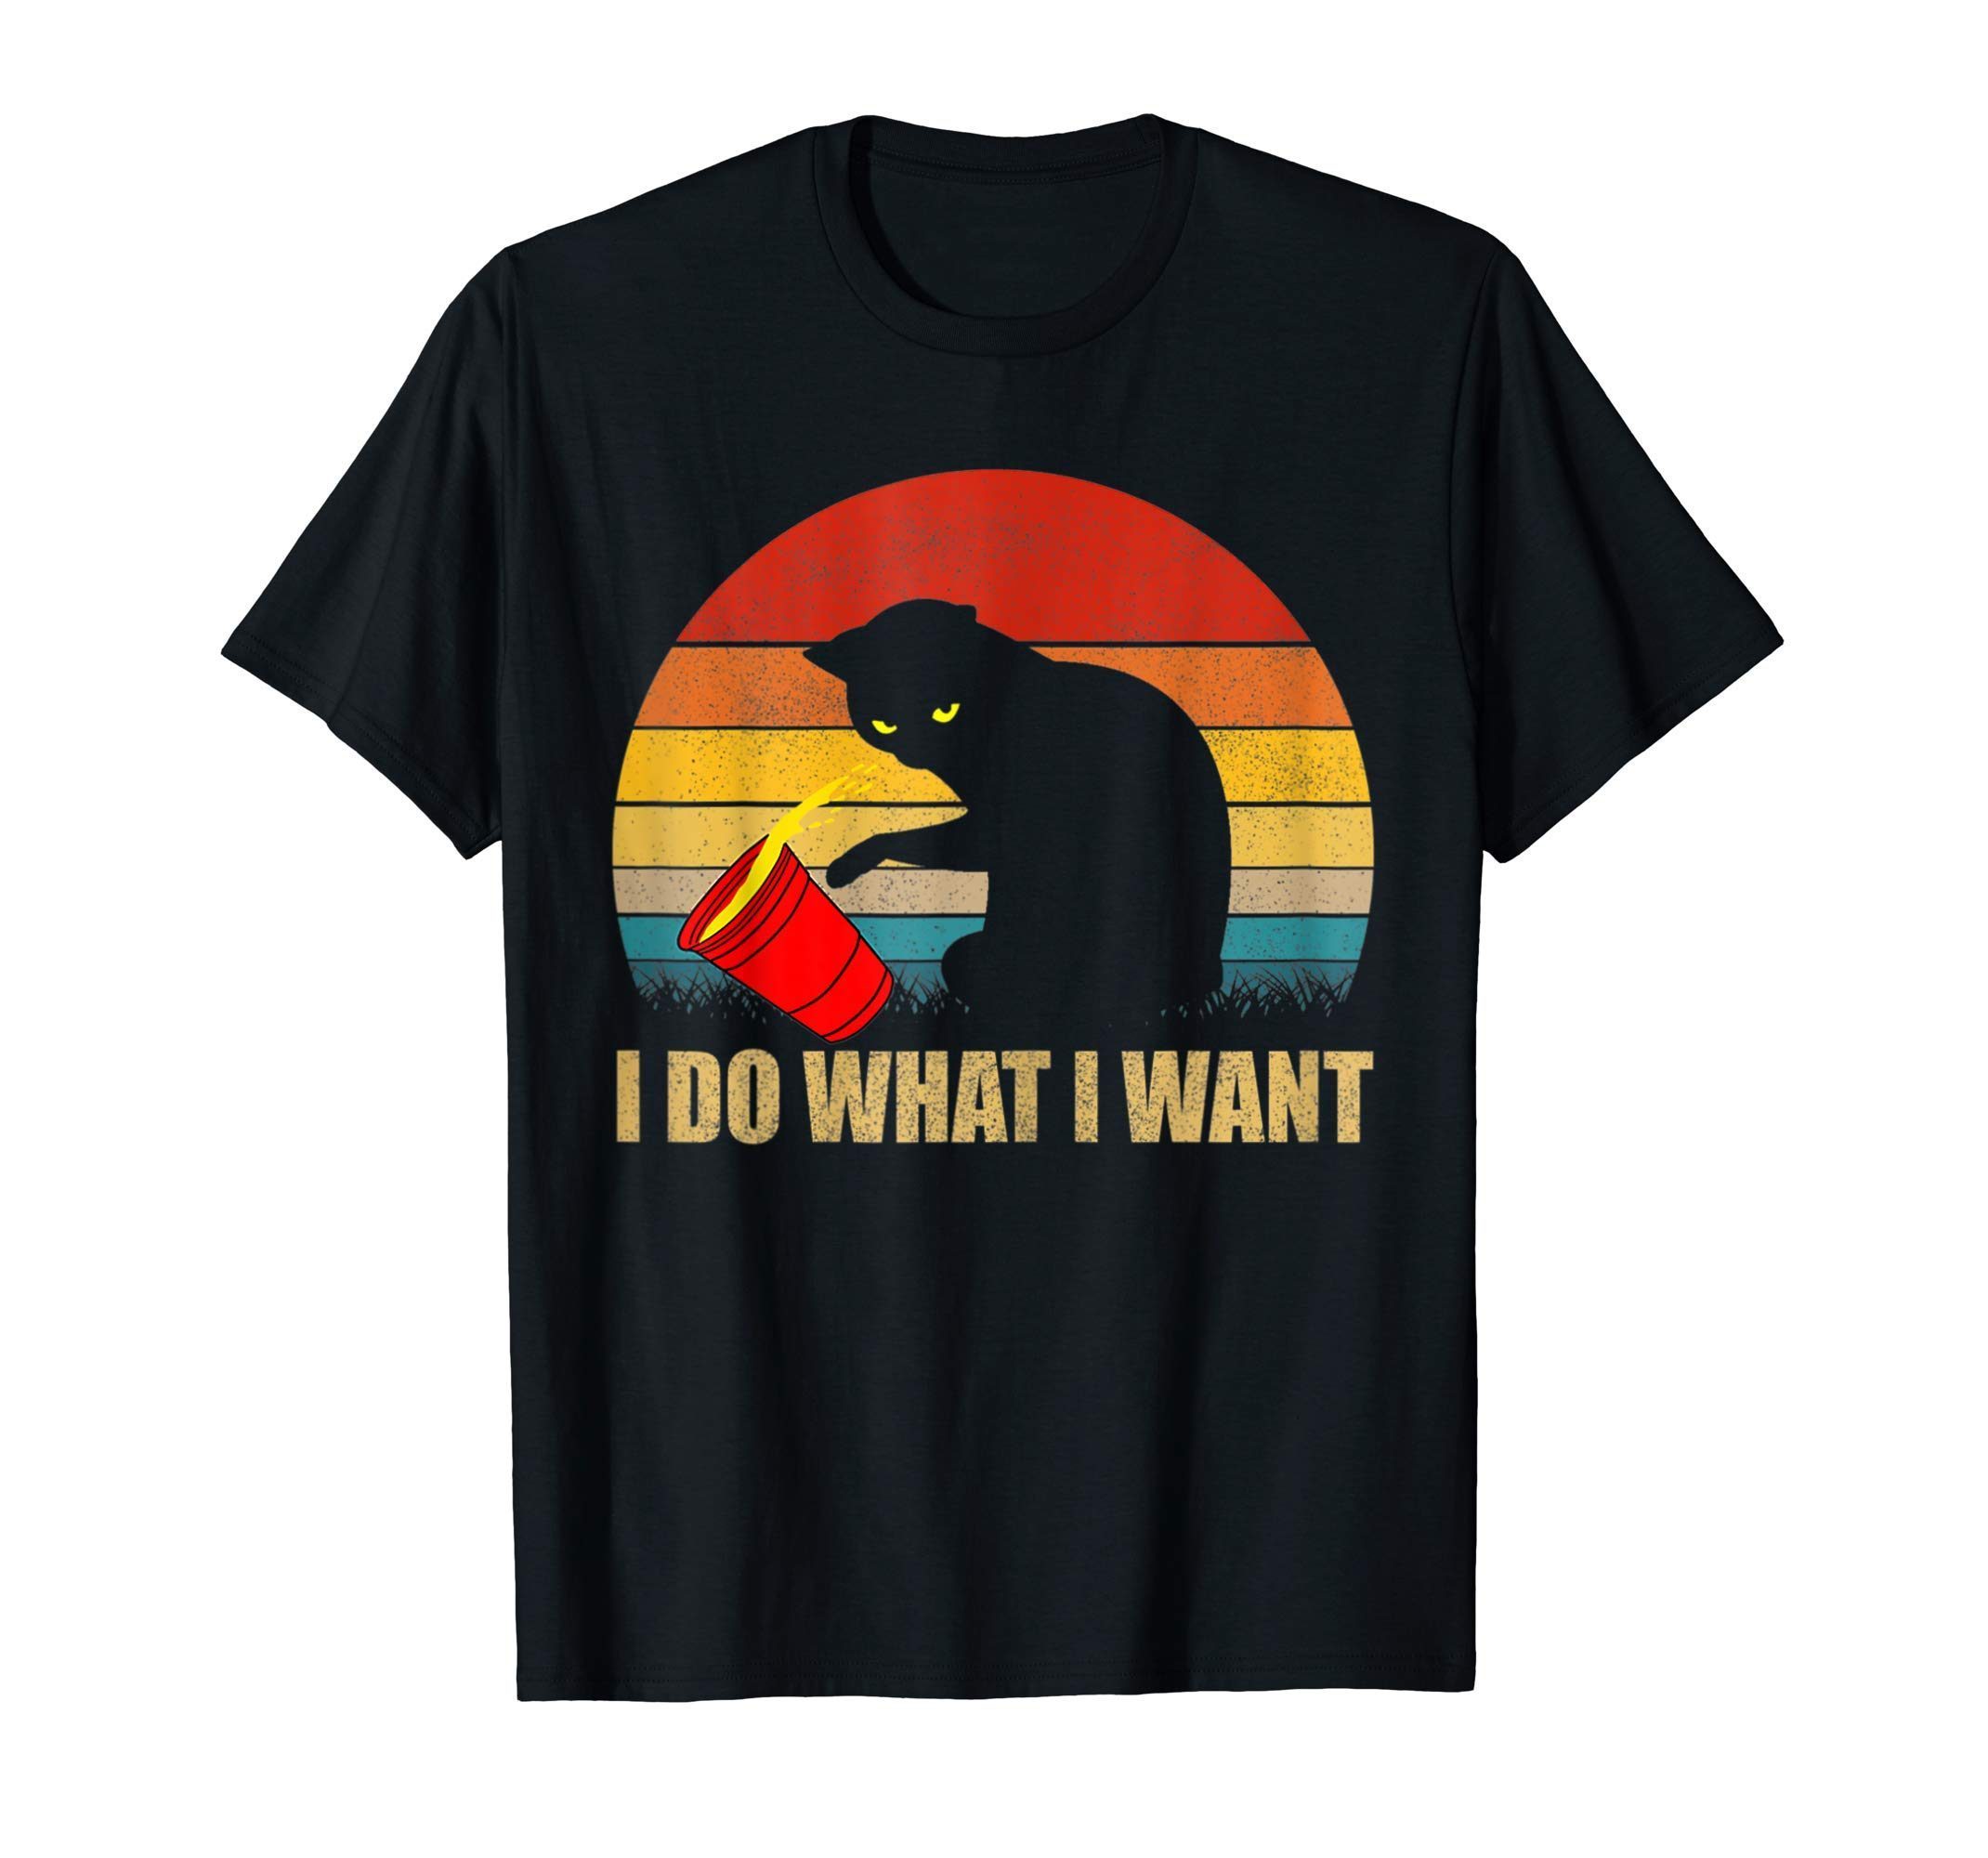 I do what I want cat t-shirt - OrderQuilt.com